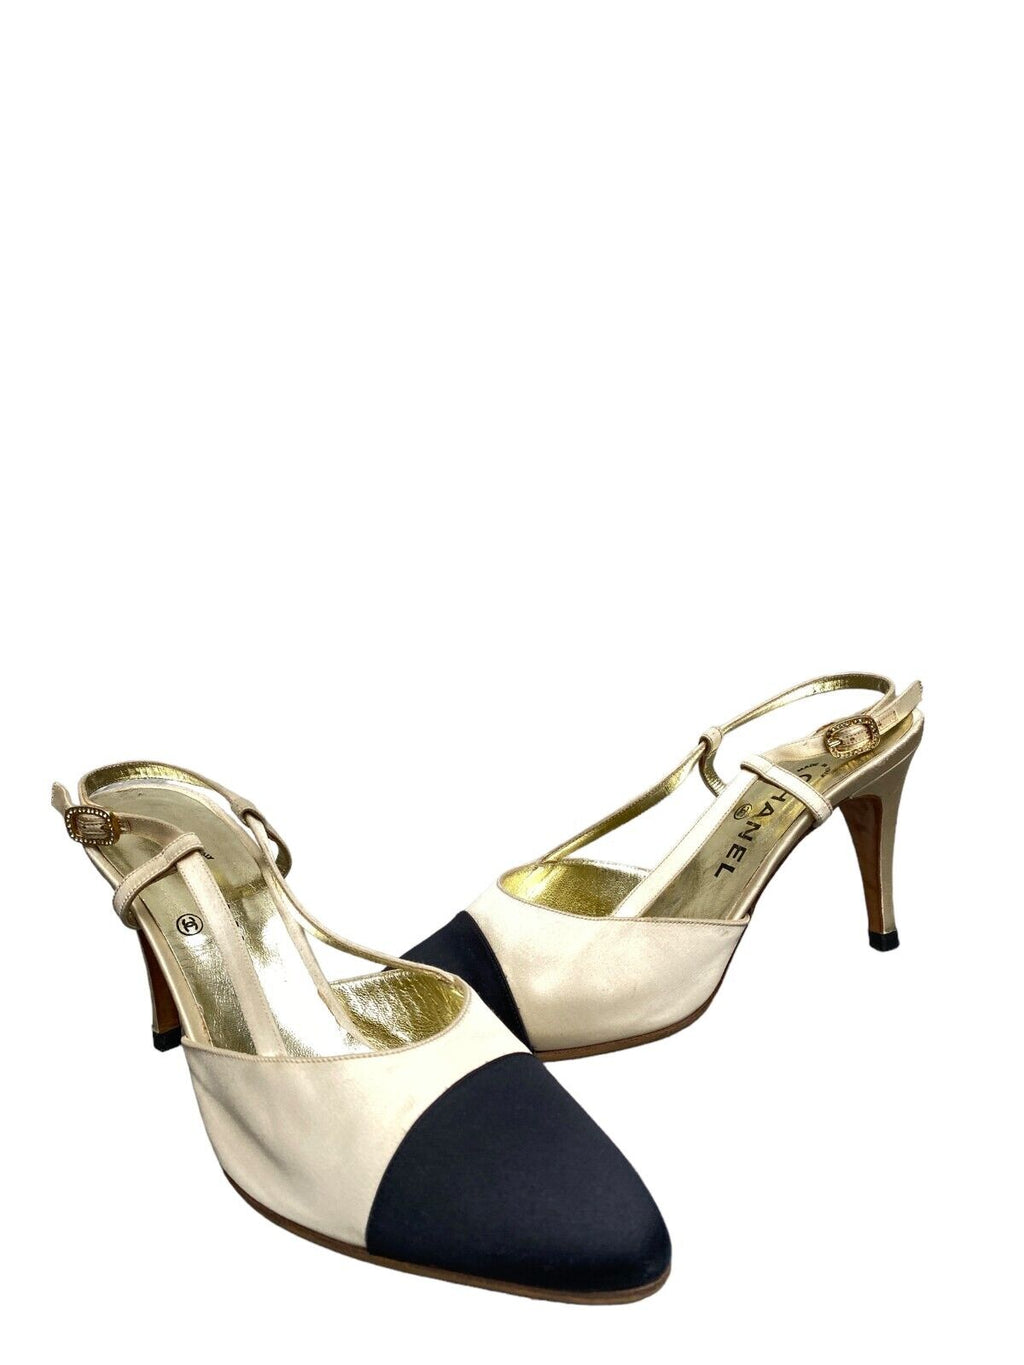 Ivory Black Slingback Pumps Heels Shoes  Size 39 1/2 US 9,5